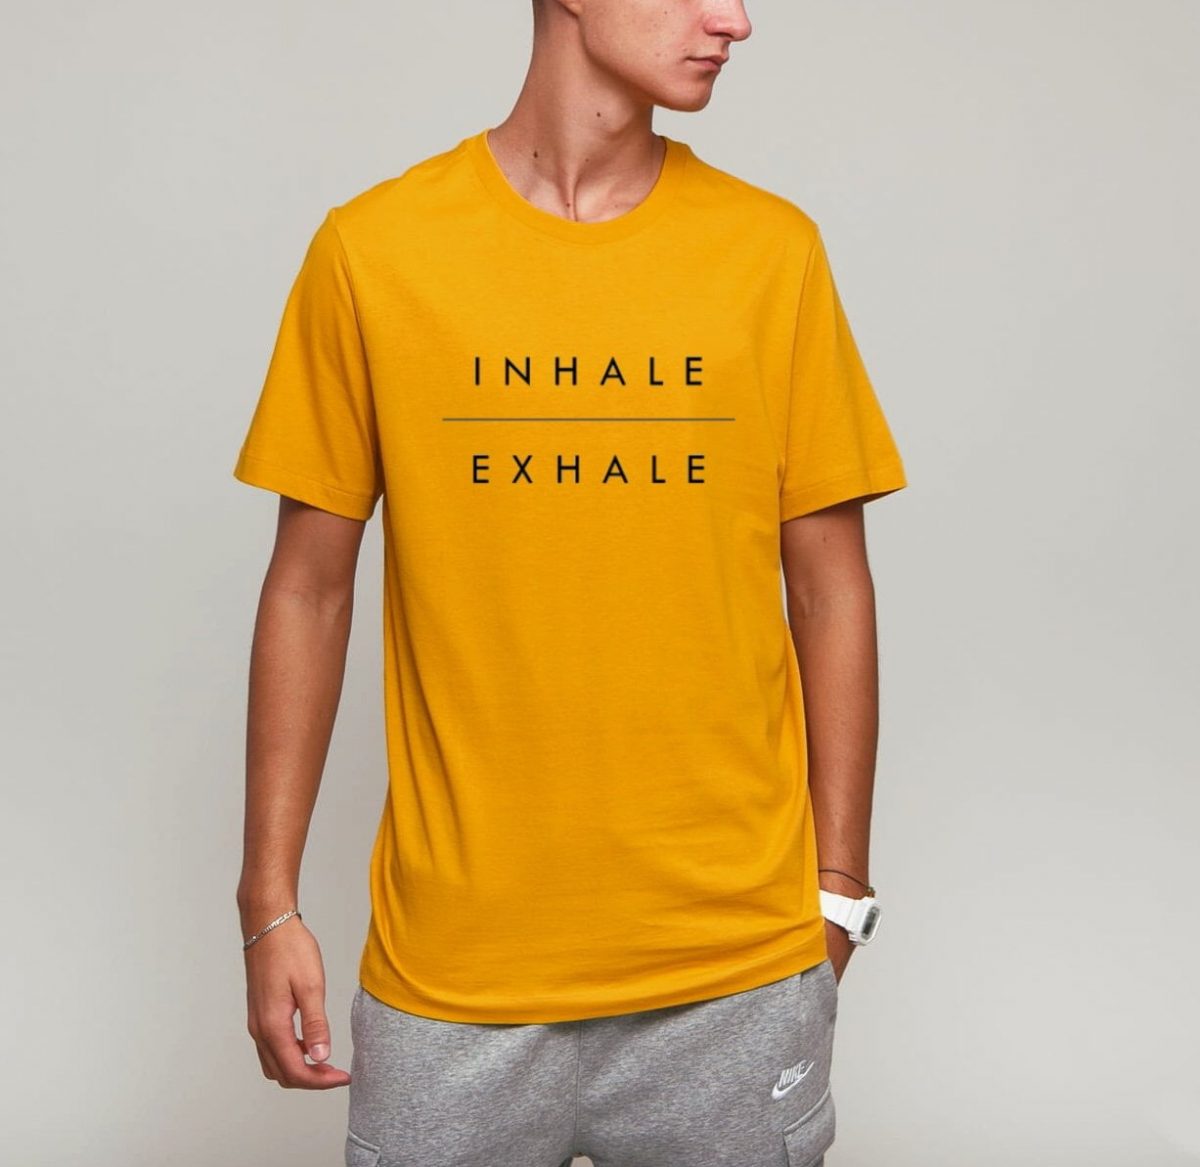 Inhale exhale half sleeve tshirt